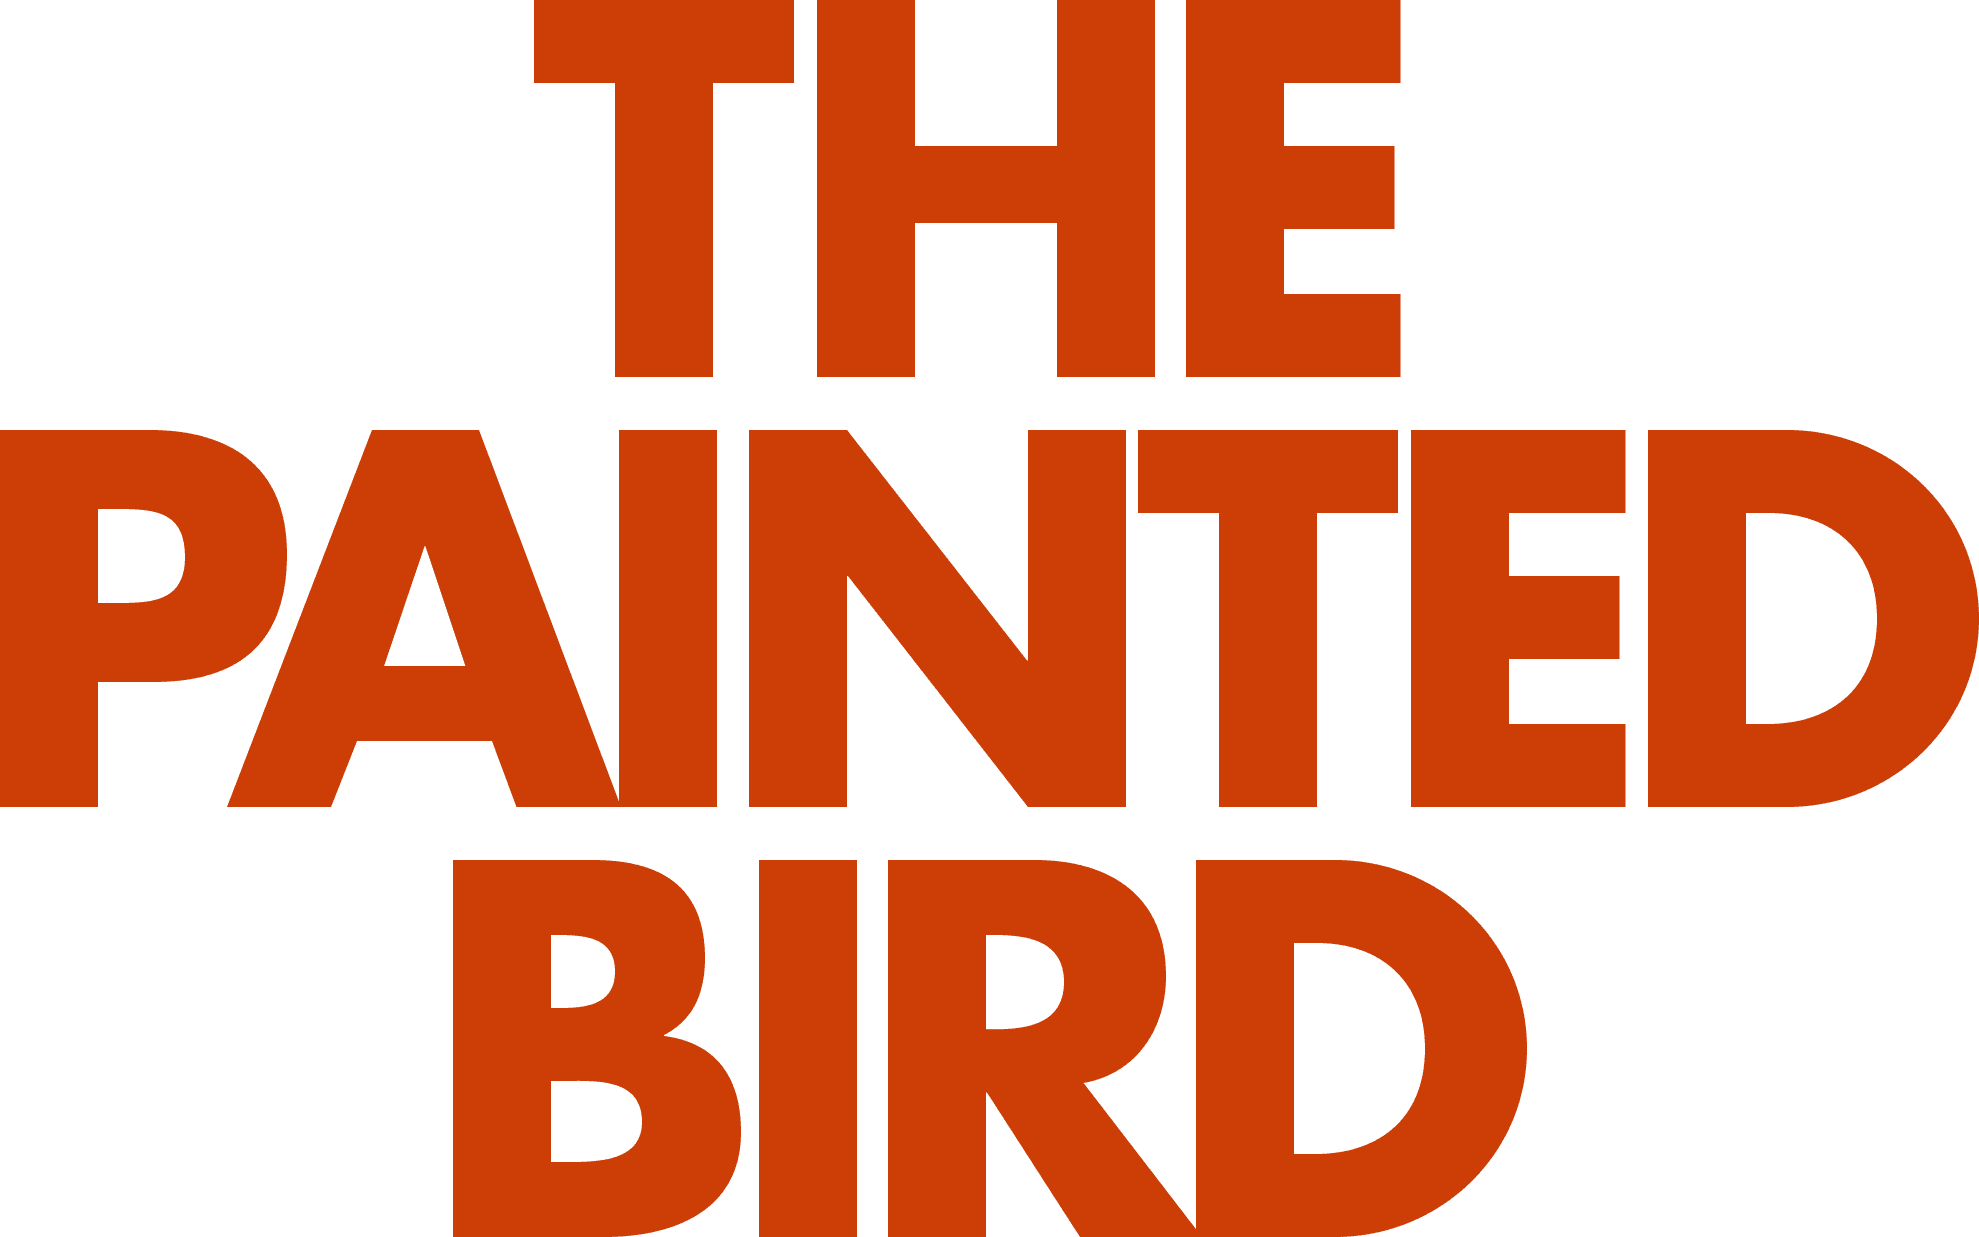 The Painted Bird logo